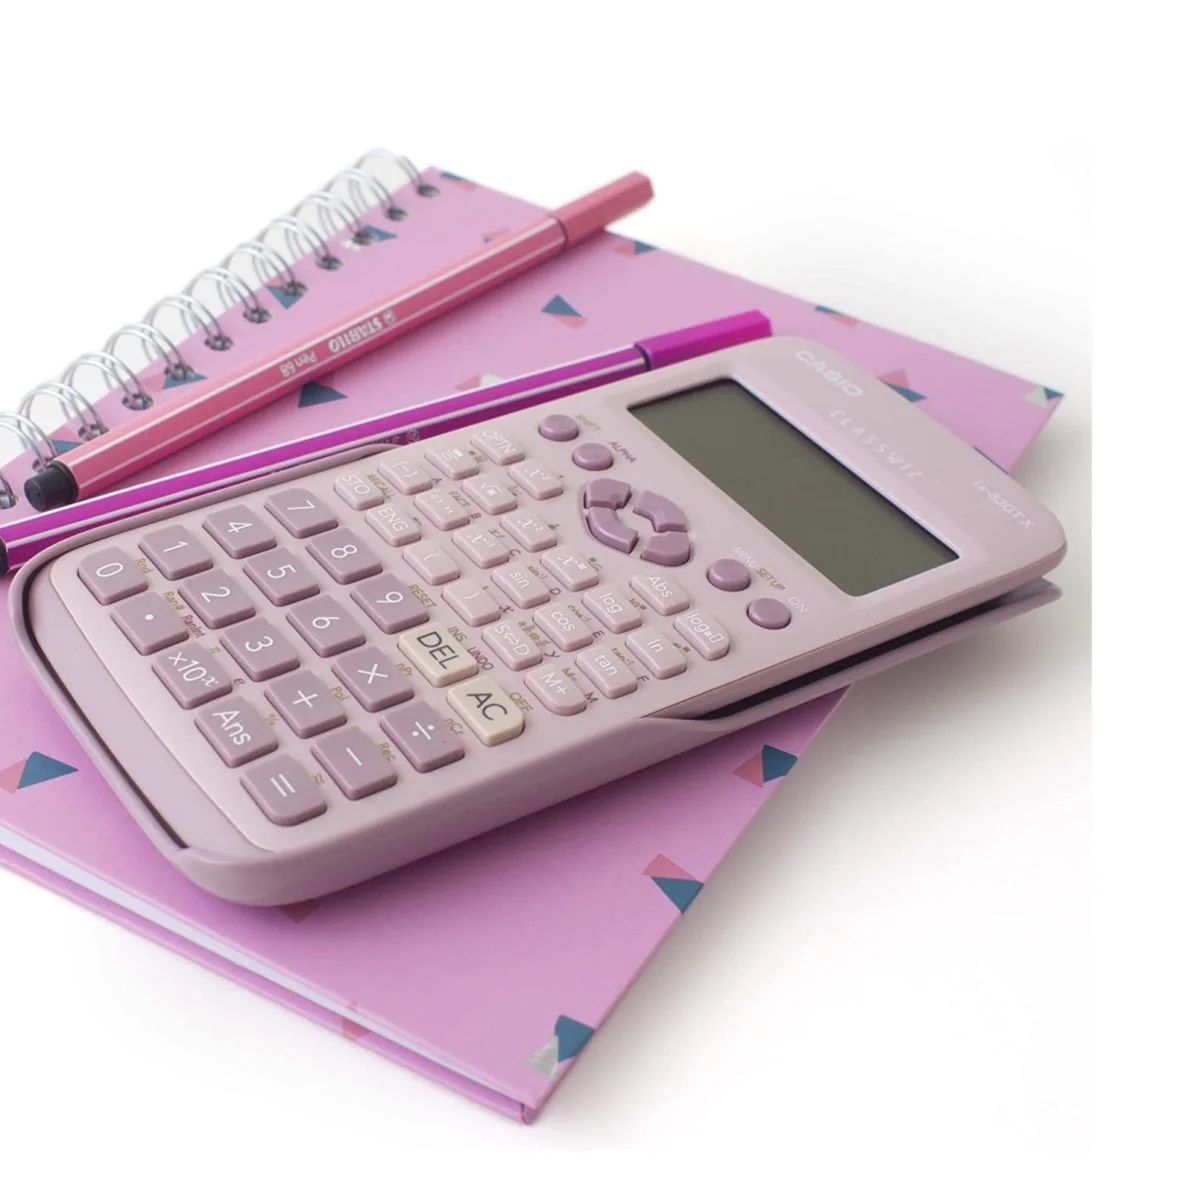 Casio Fx-83Gtx Scientific Calculator Pink